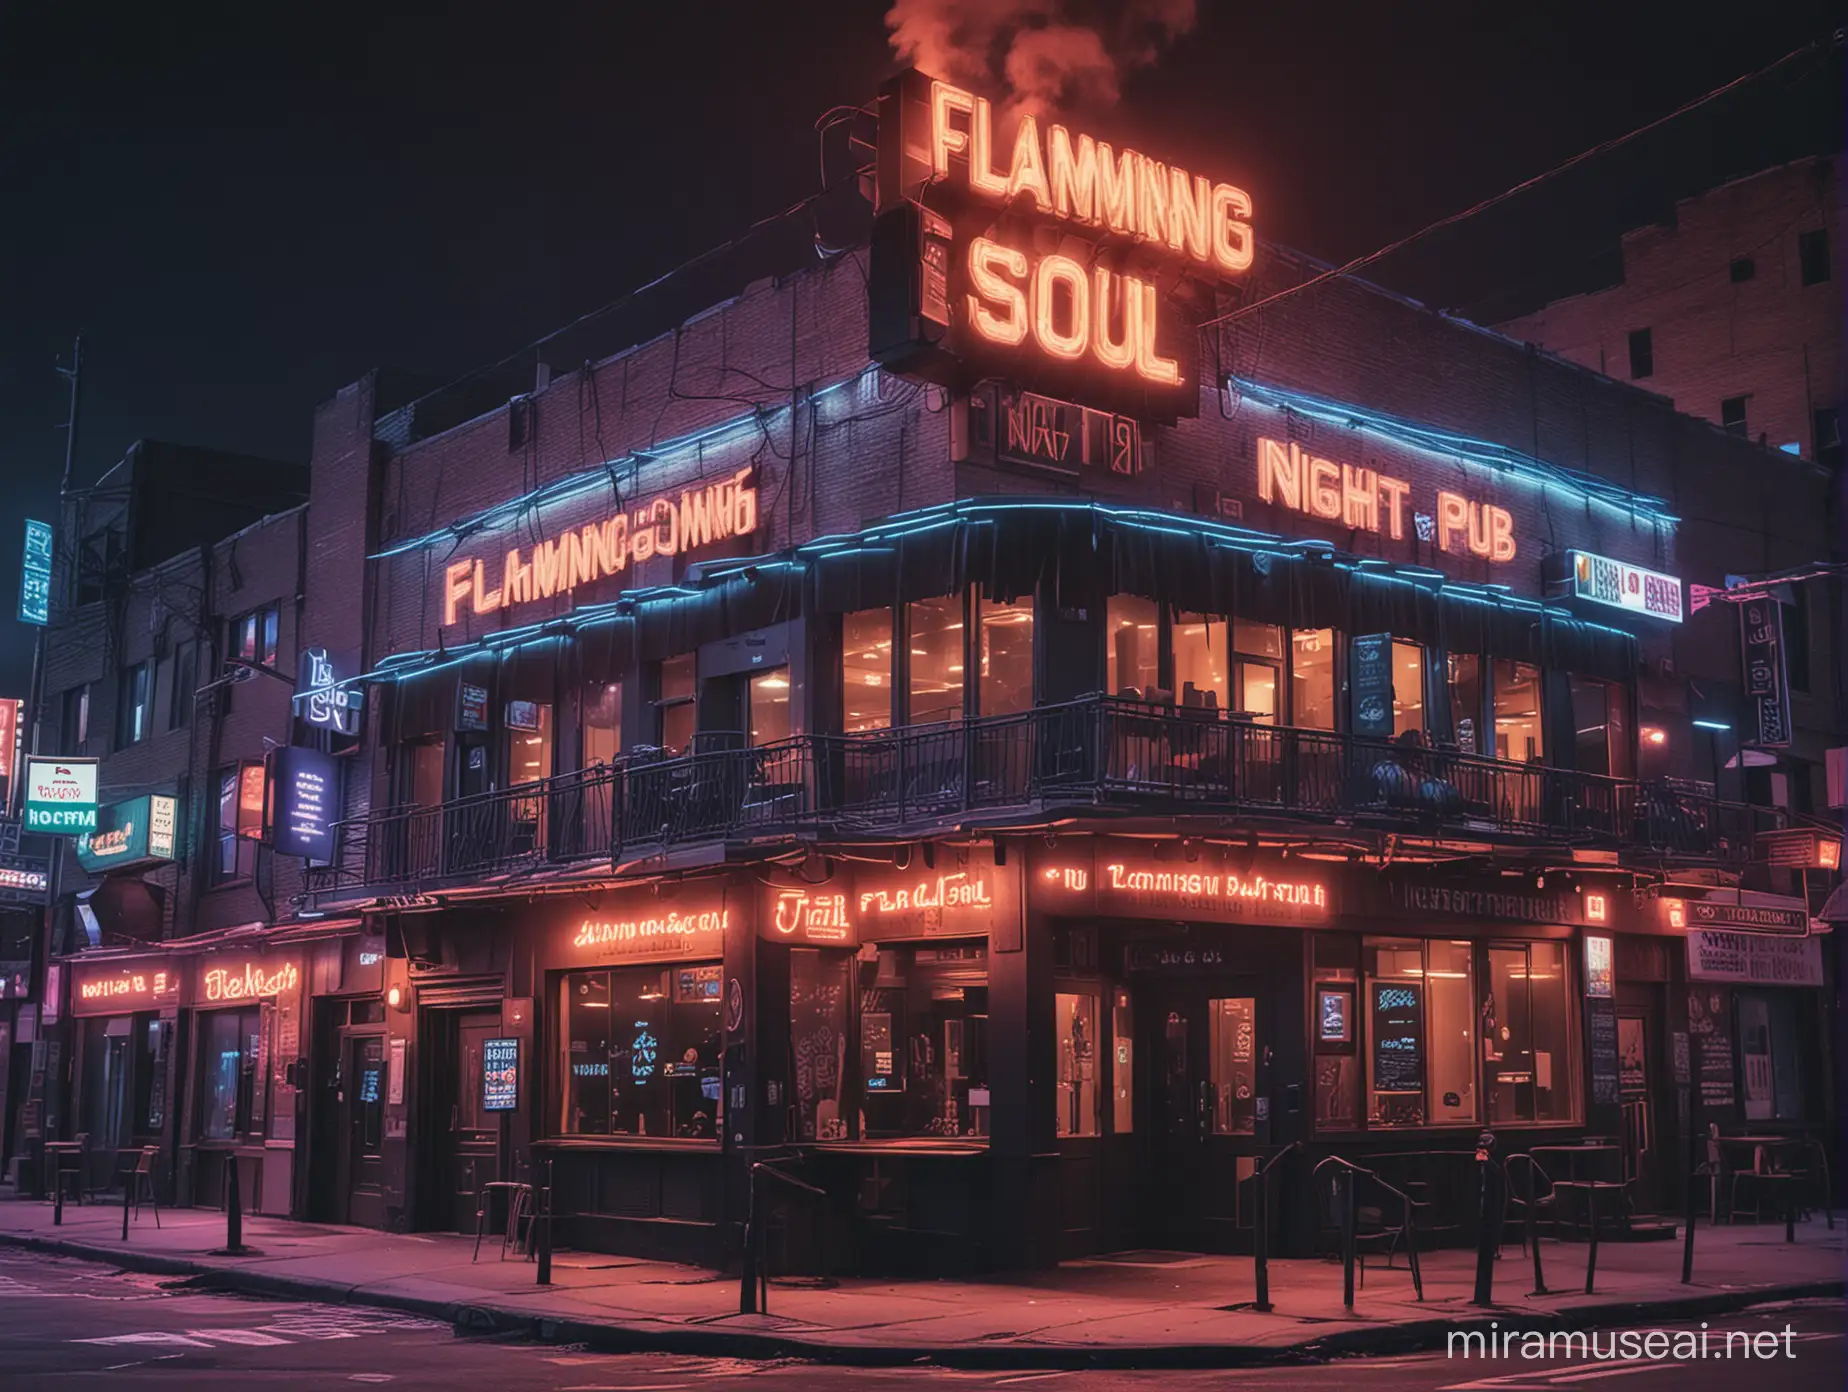 a cyberpunk nightclub with the text "FLAMING SOUL NIGHT PUB" in a cyberpunk New York suburbs